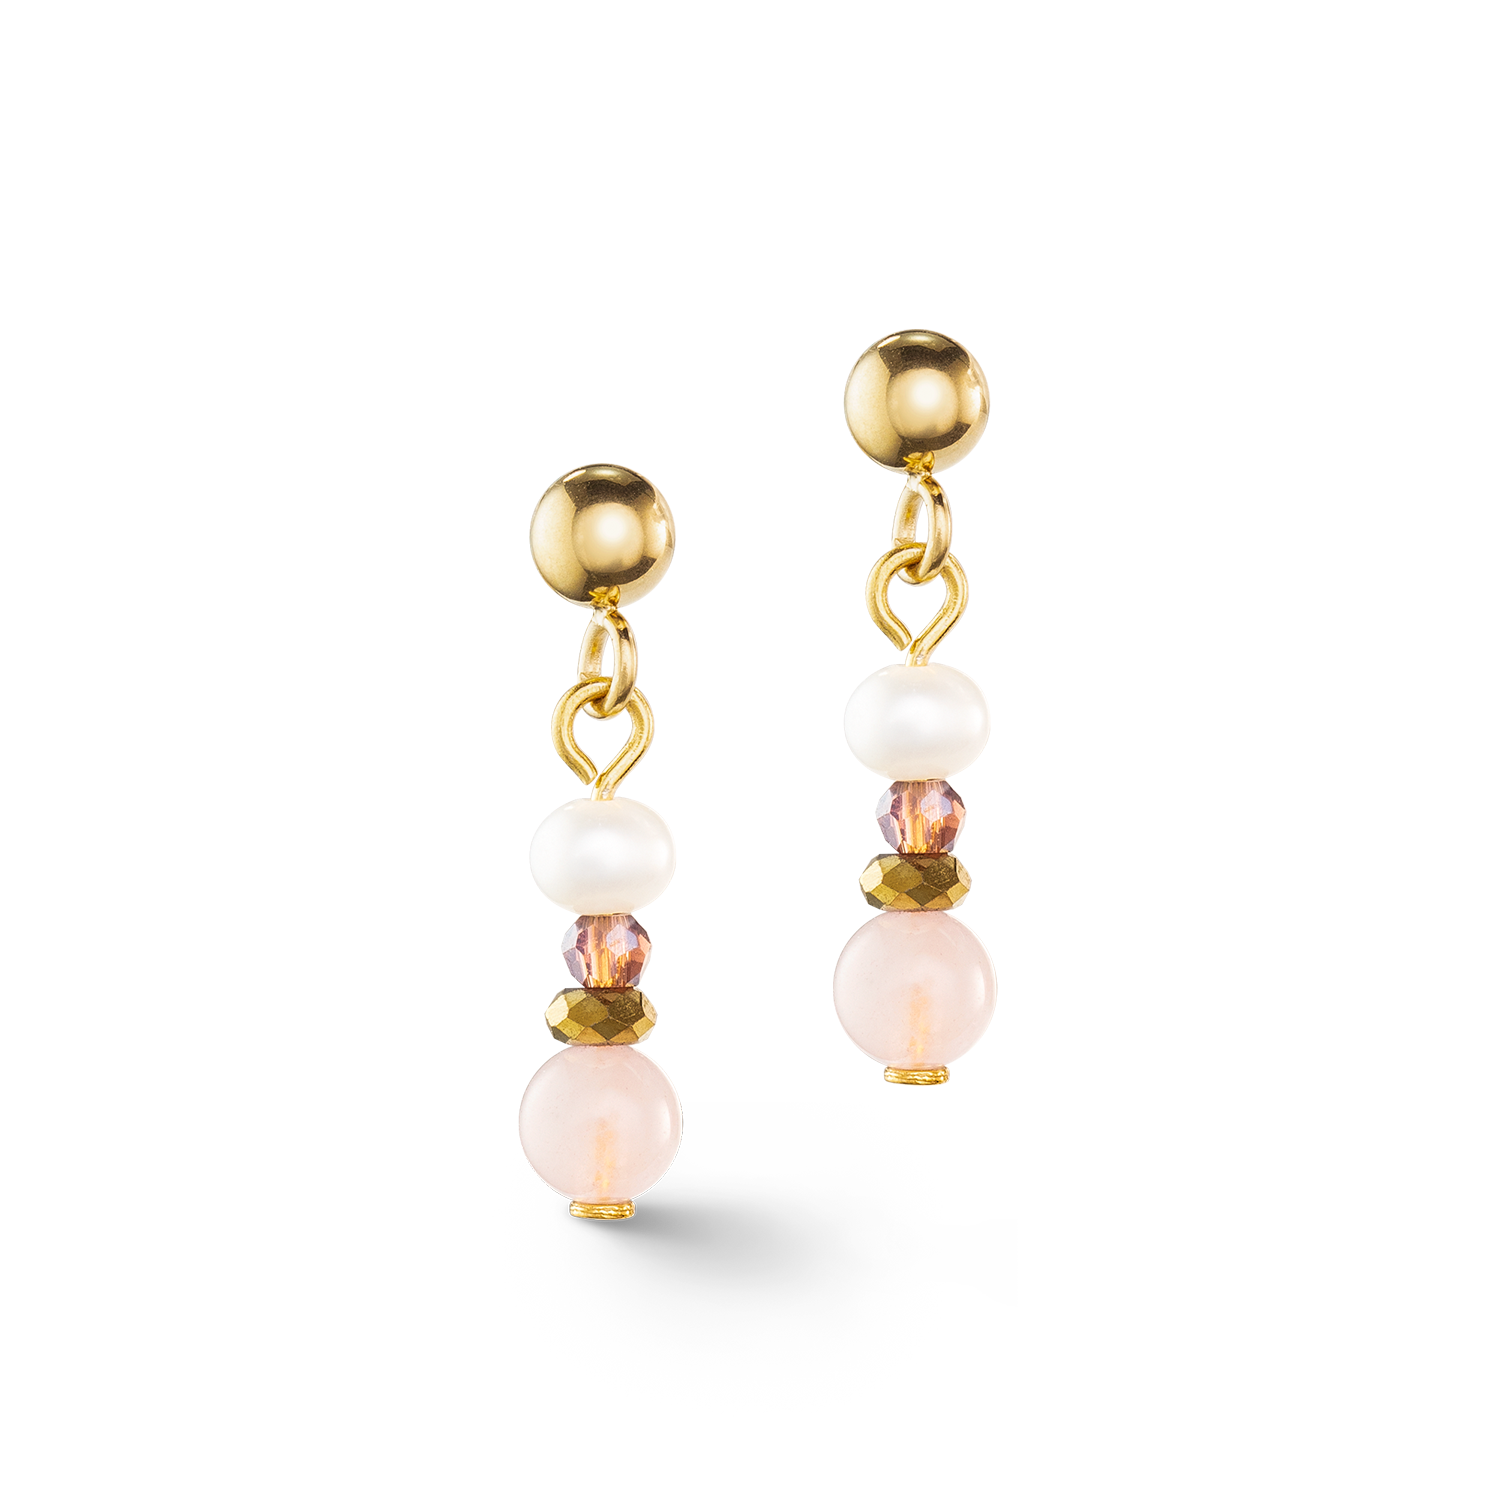 Earrings Romantic Freshwater Pearls & Rose Quartz gold